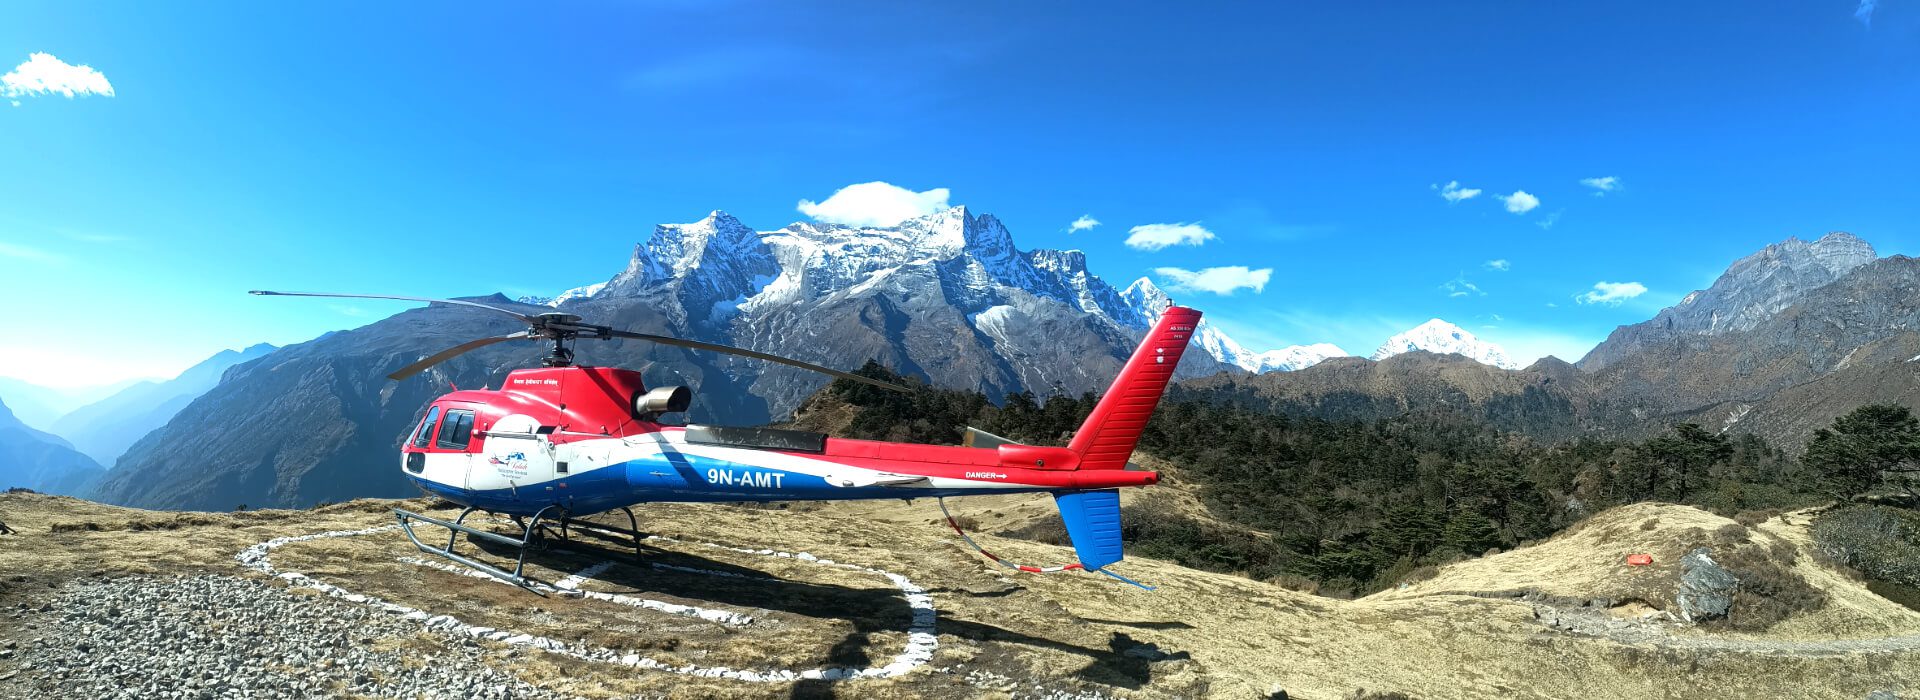 Everest Base Camp Trek & Helicopter Ride to Lukla